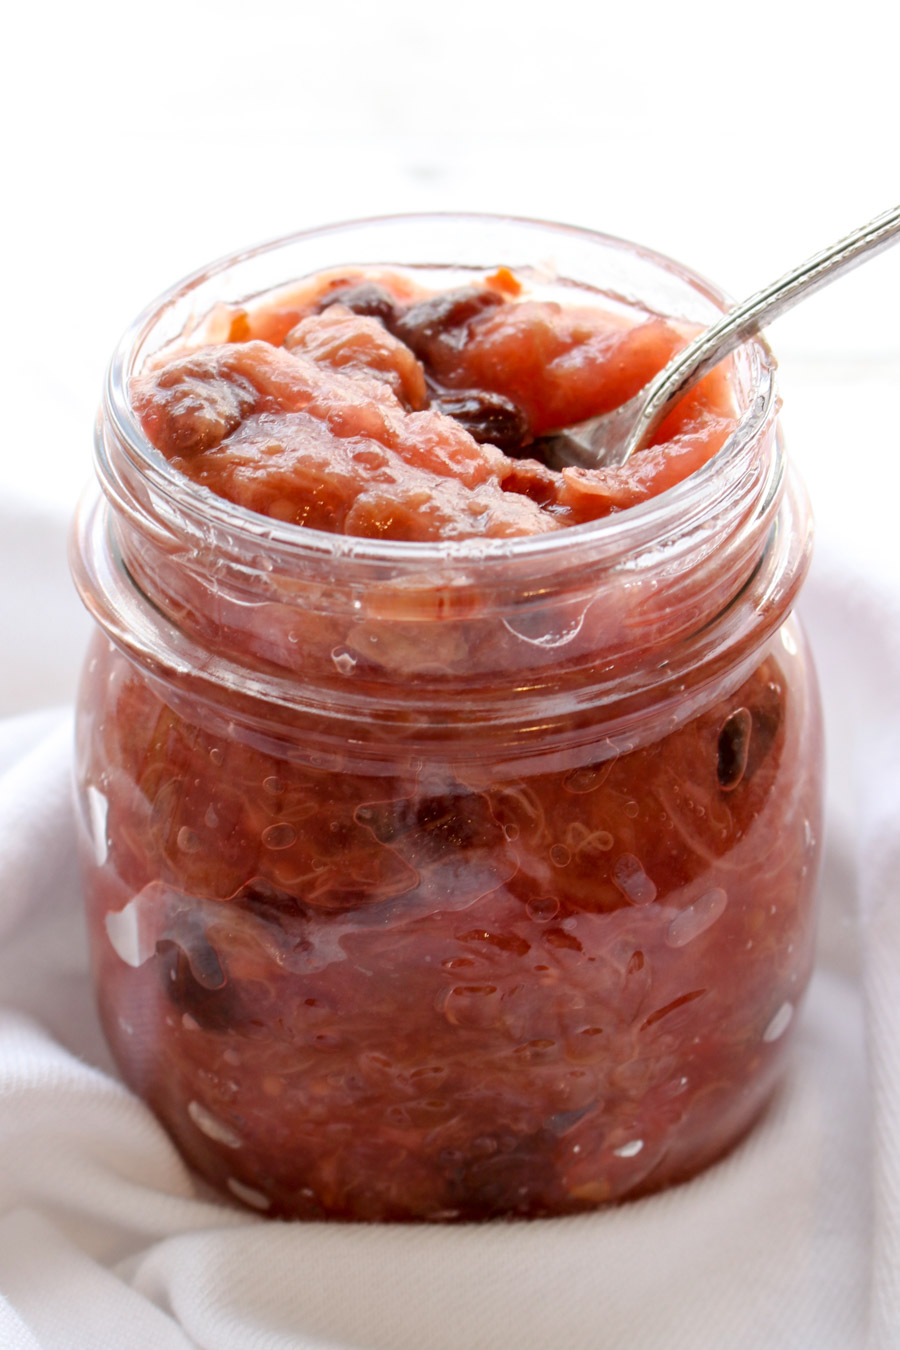 Mason jar of homemade rhubarb chutney